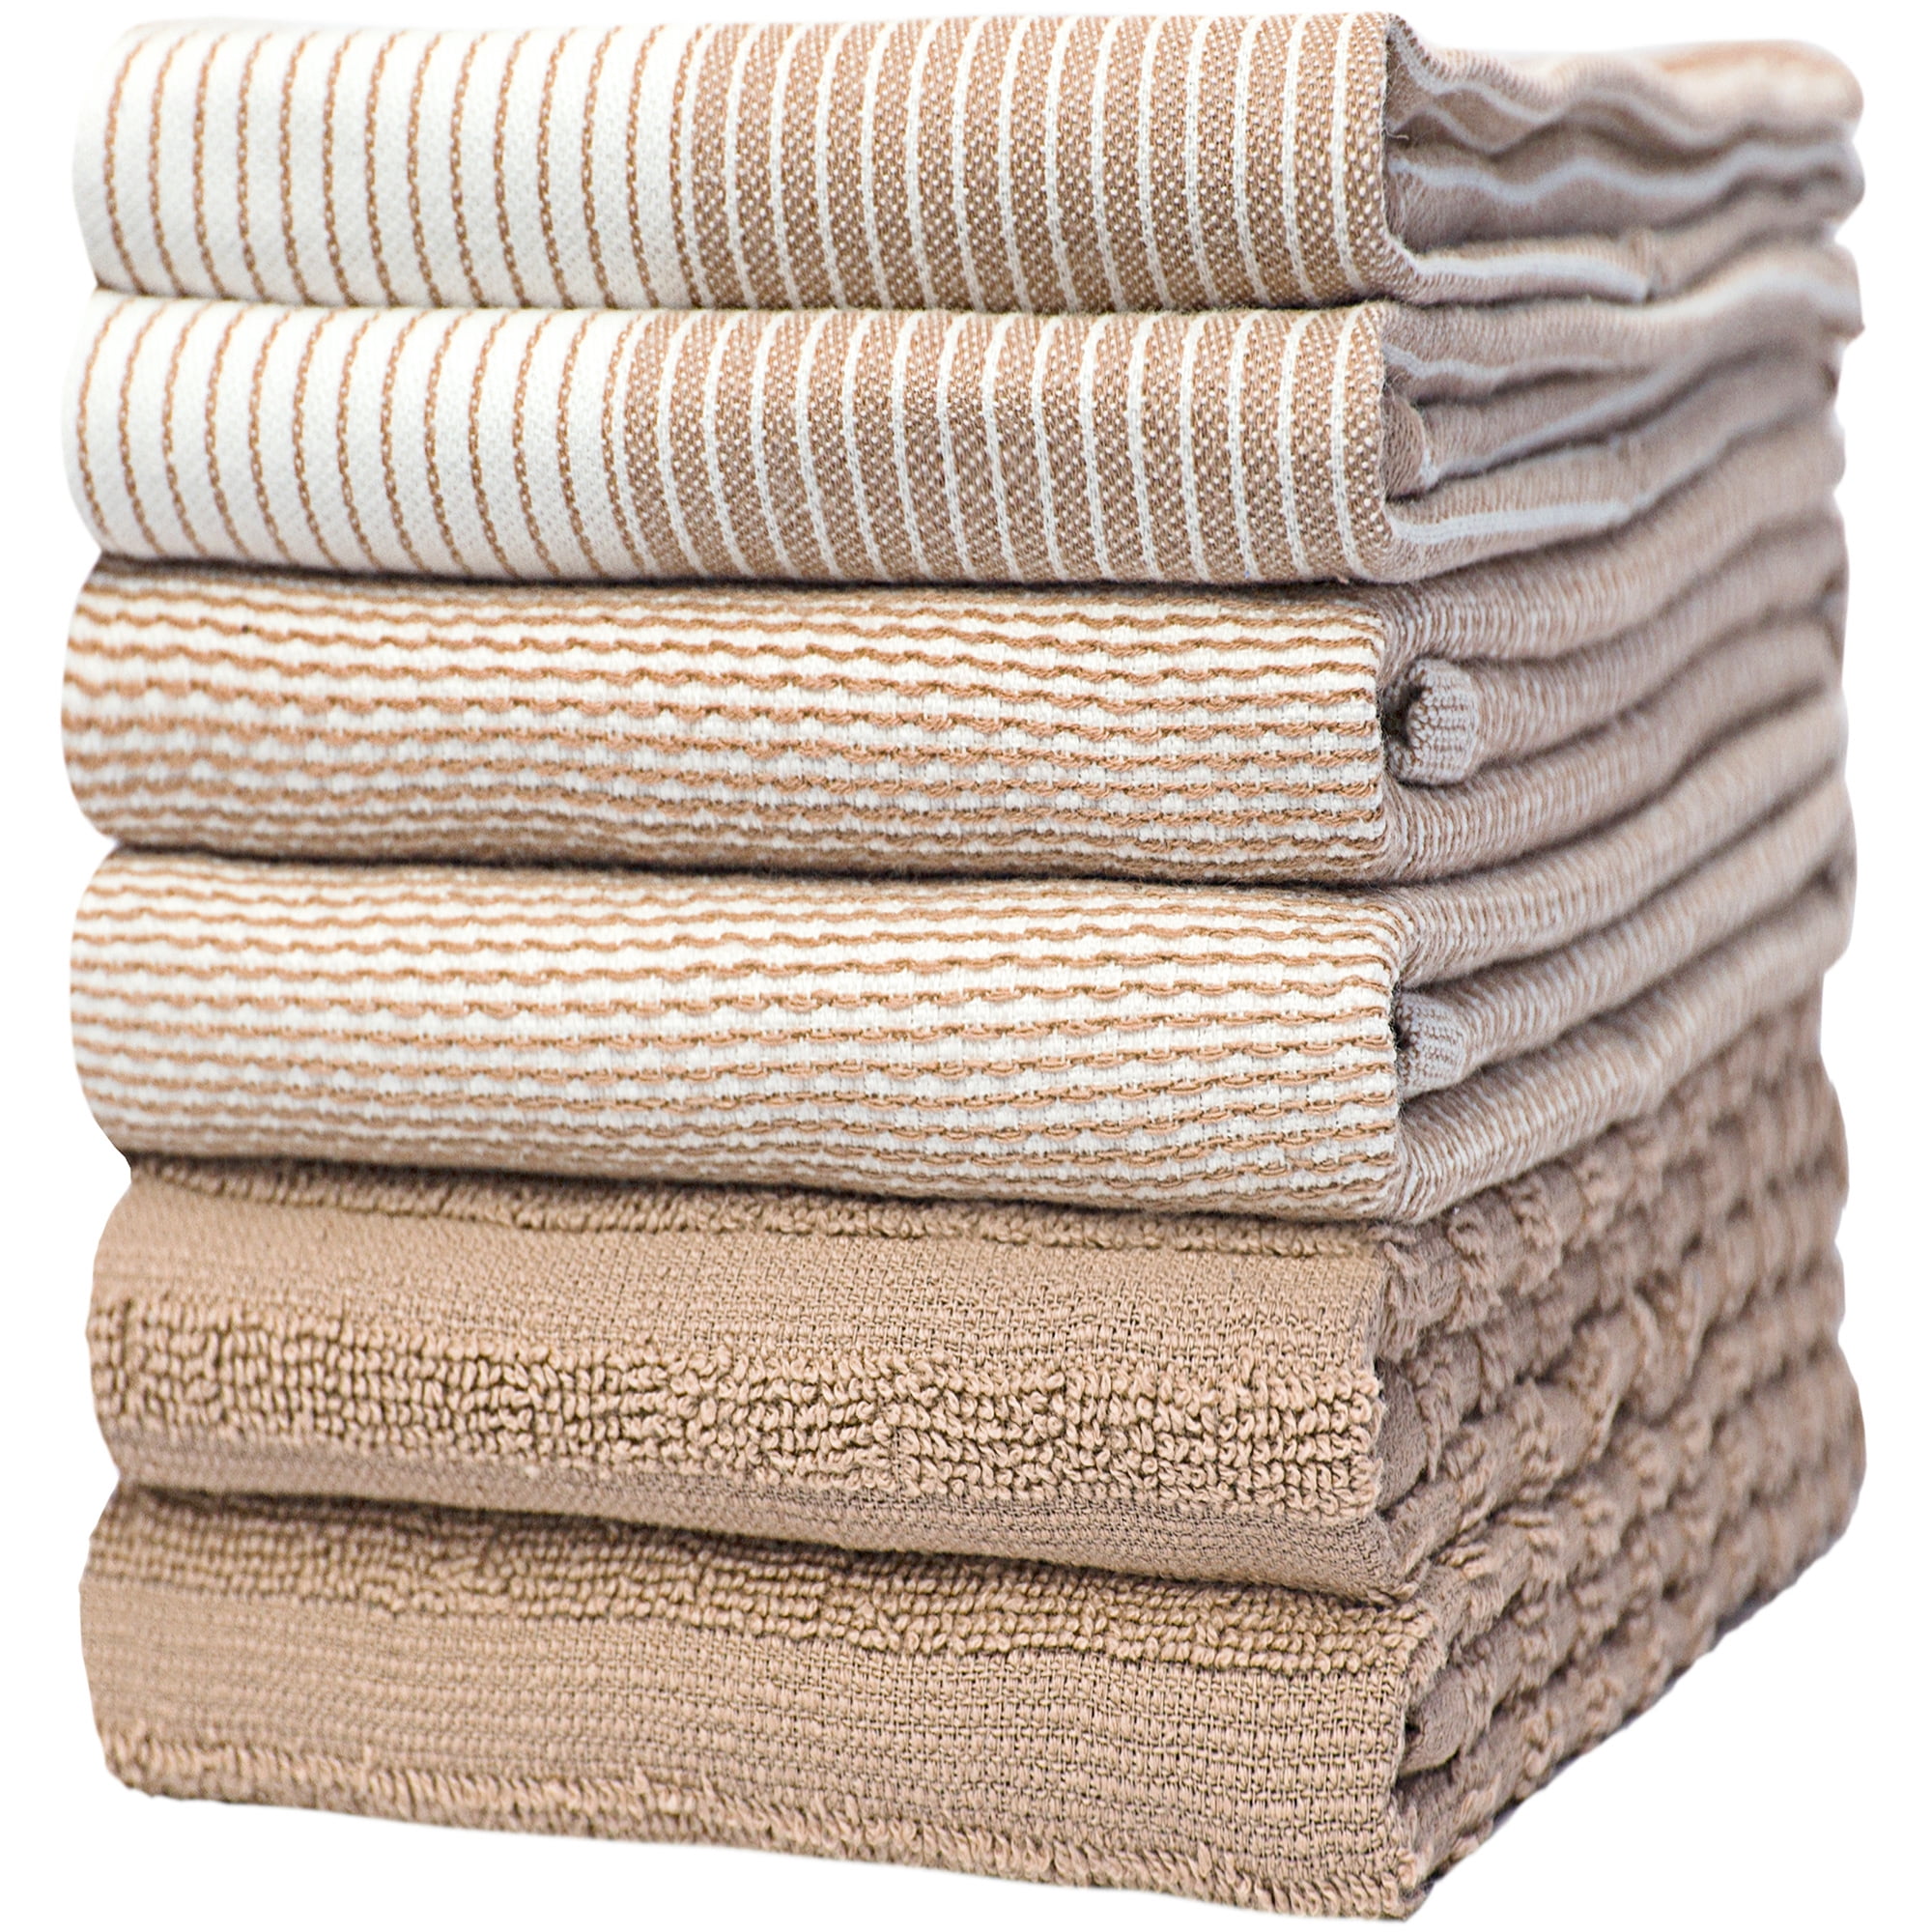 Sage Green Check 40*60cm Tea Towels Absorption Walf Checks Kitchen